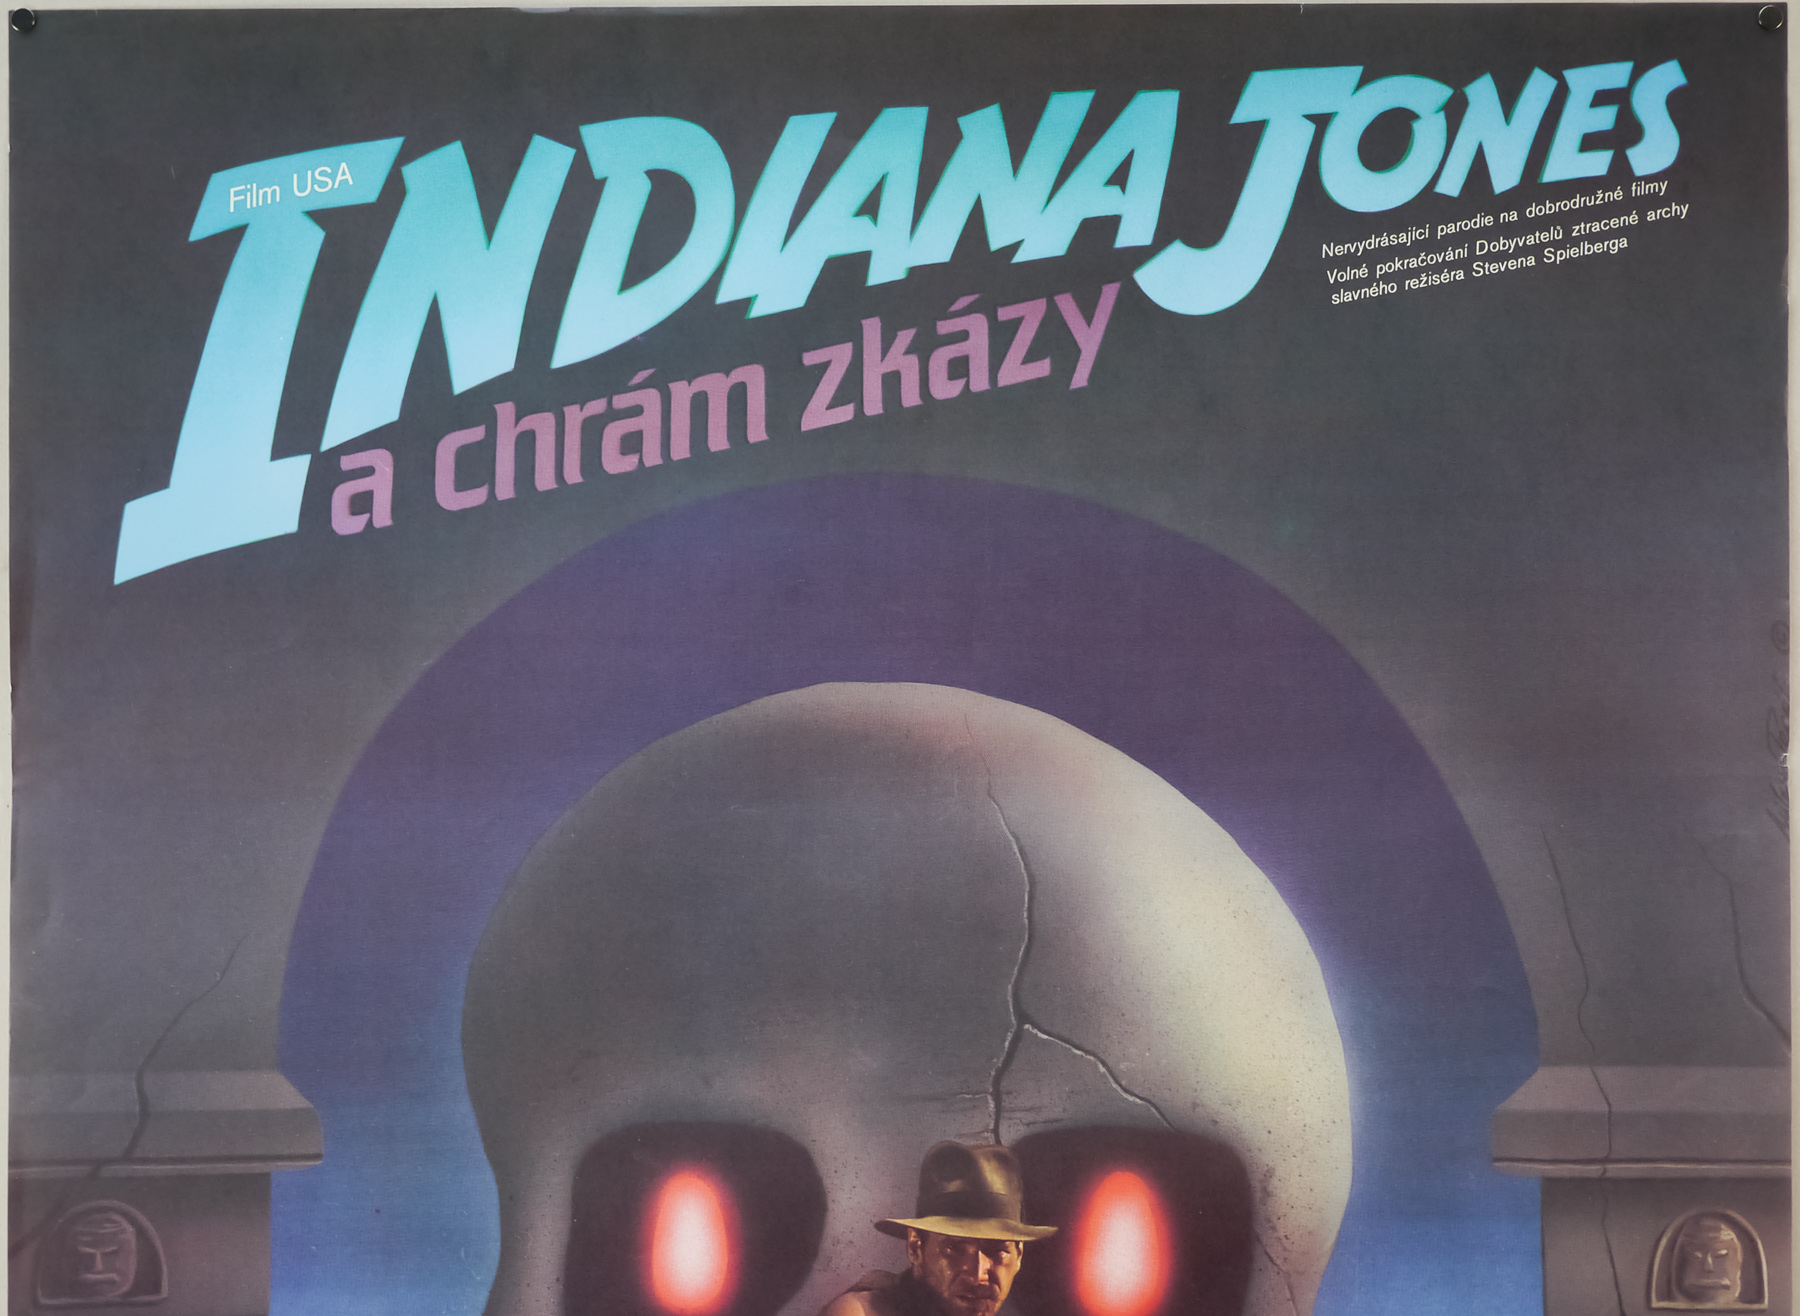 Indiana Jones & the Temple of Doom Movie Poster OG 1 Sh. Vintage Spielberg/Ford